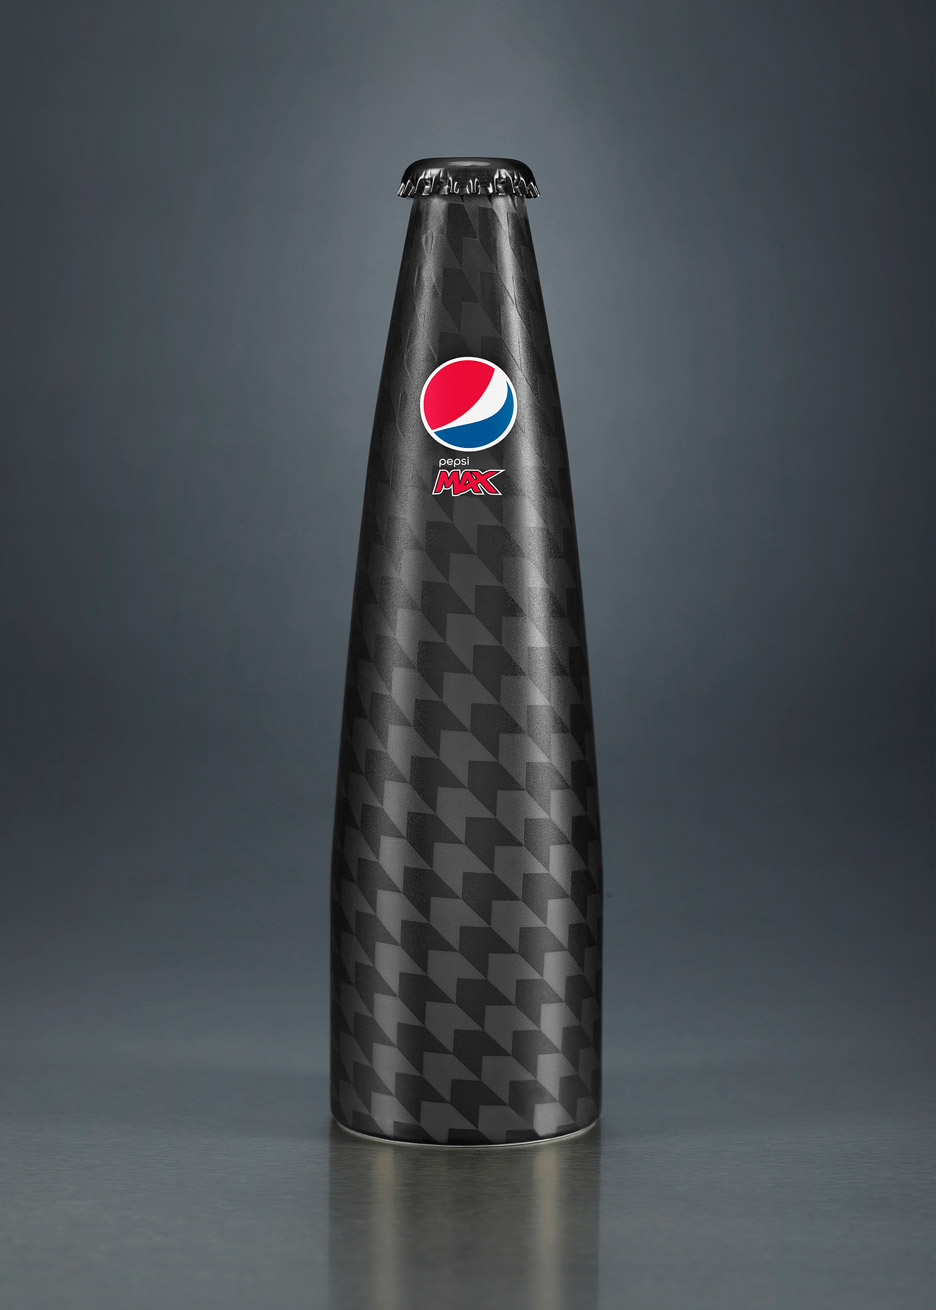 Prestige Pepsi bottle by Karim Rashid for Milan design week 2016